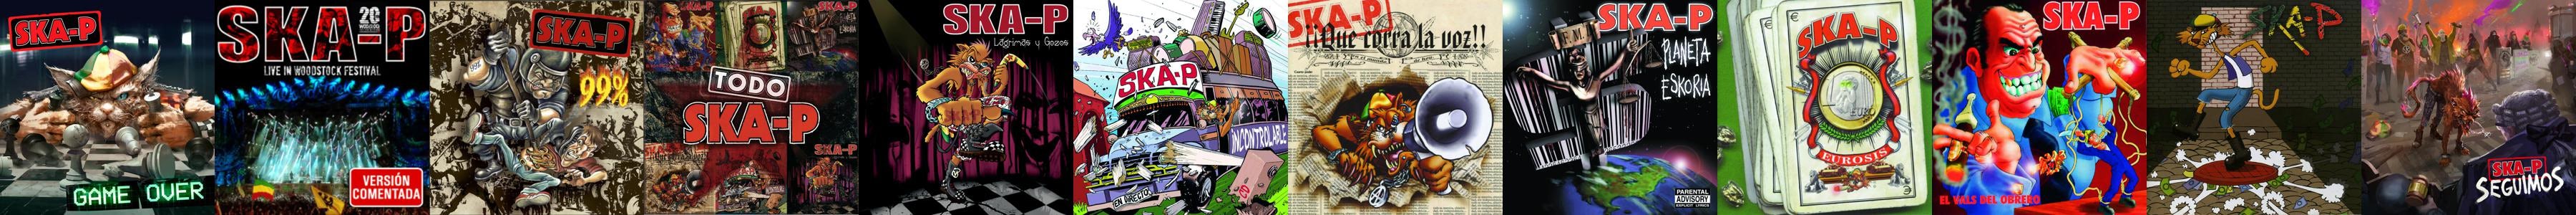 Ska-P Shirts, Ska-P Merch, Ska-P Hoodies, Ska-P Vinyl Records, Ska-P ...